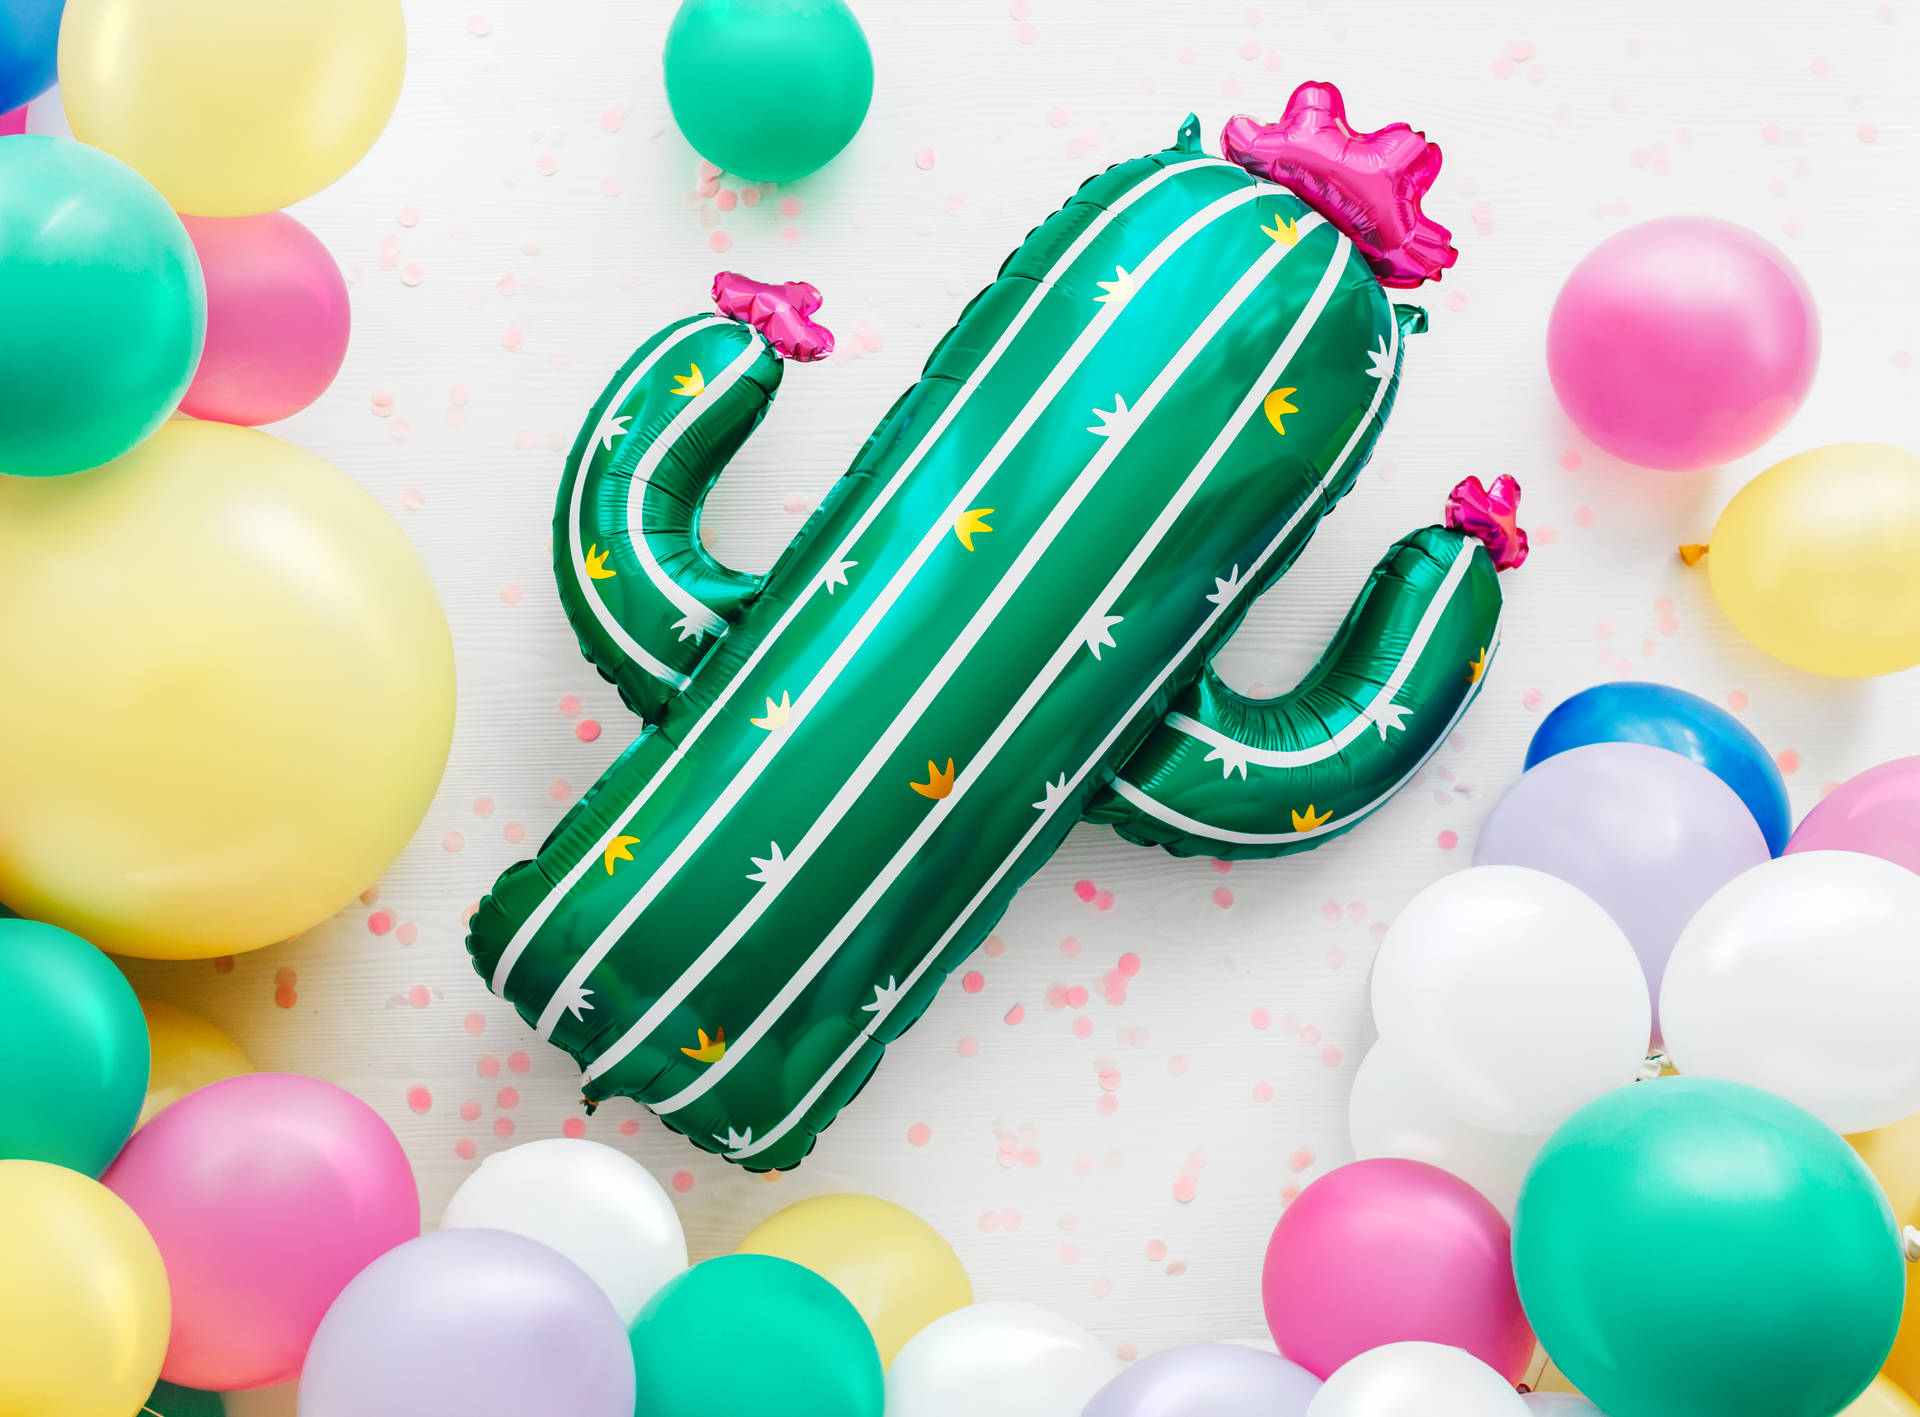 Cactus Balloon Foil Background